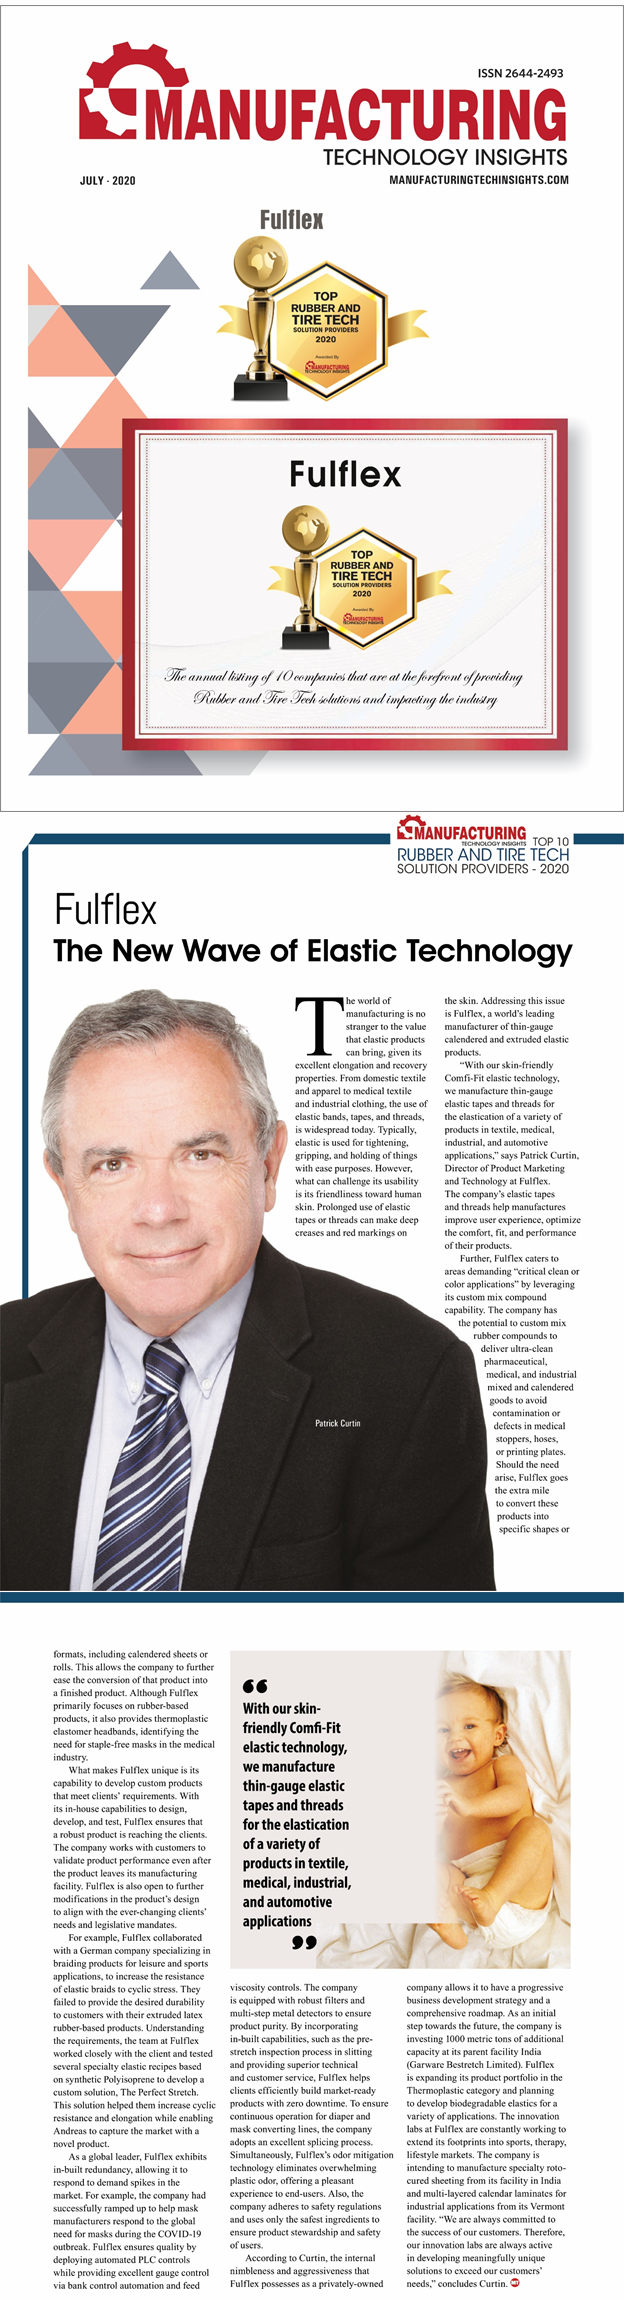 Fulflex - The New Wave of Elastic Technology